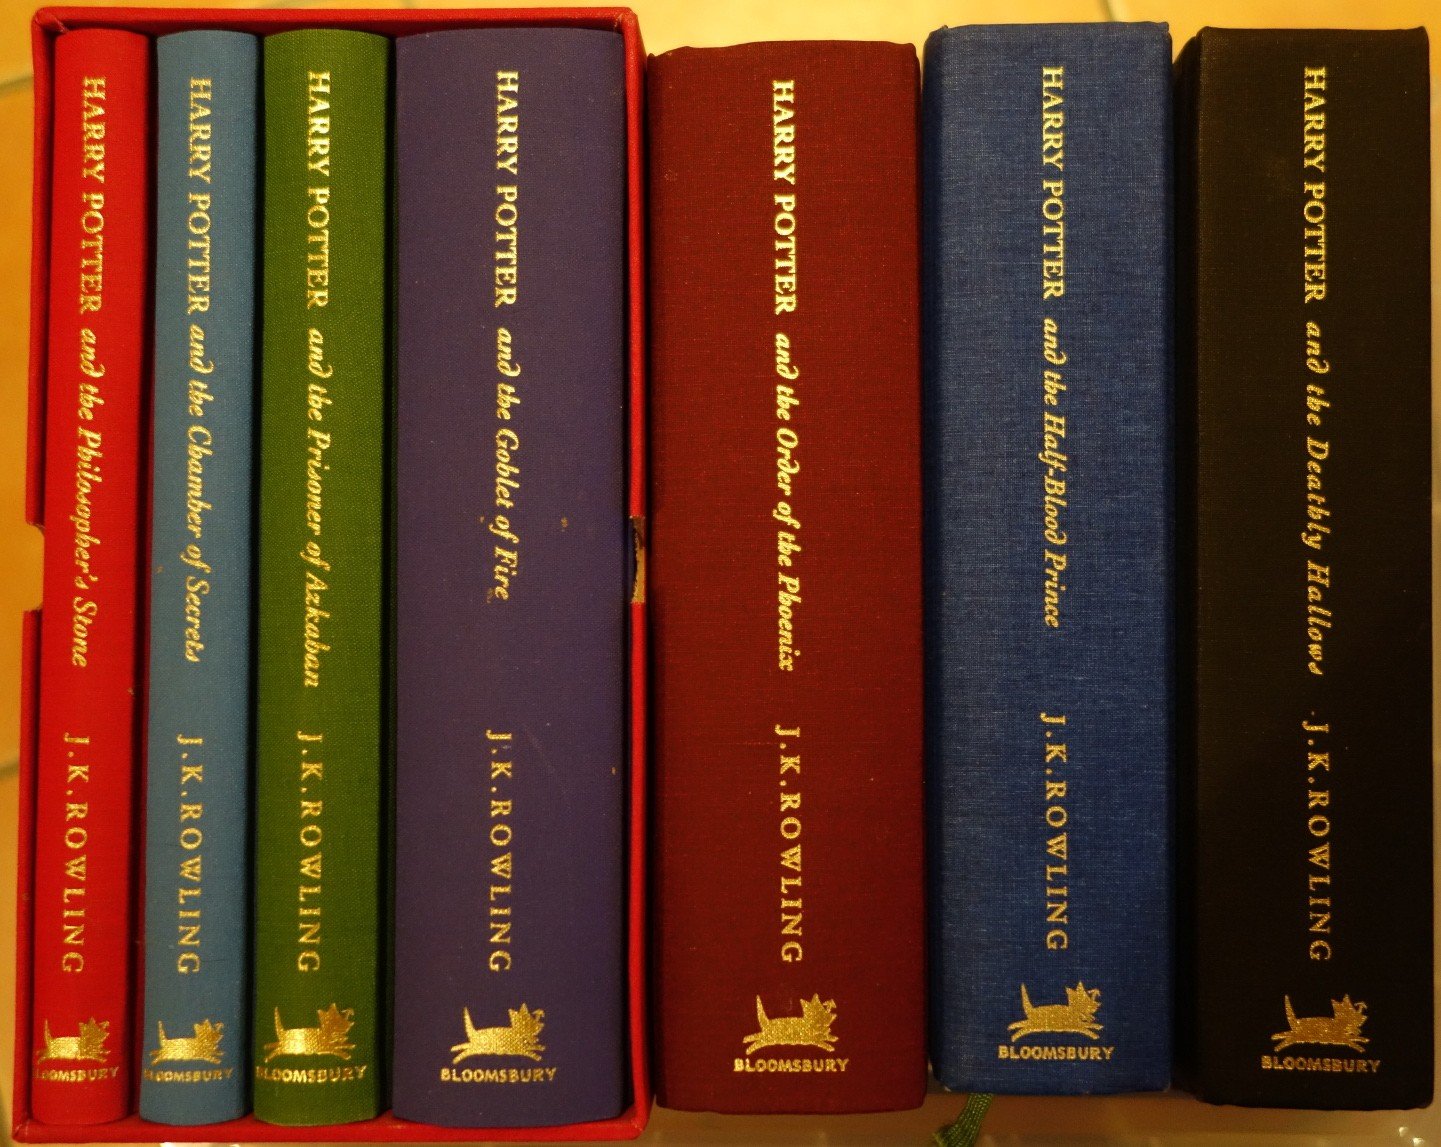 Harry Potter Deluxe Special Edition Alle 7 Bande Im Original Rowling Joanne K Buch Gebraucht Kaufen A029kr0i01zzn